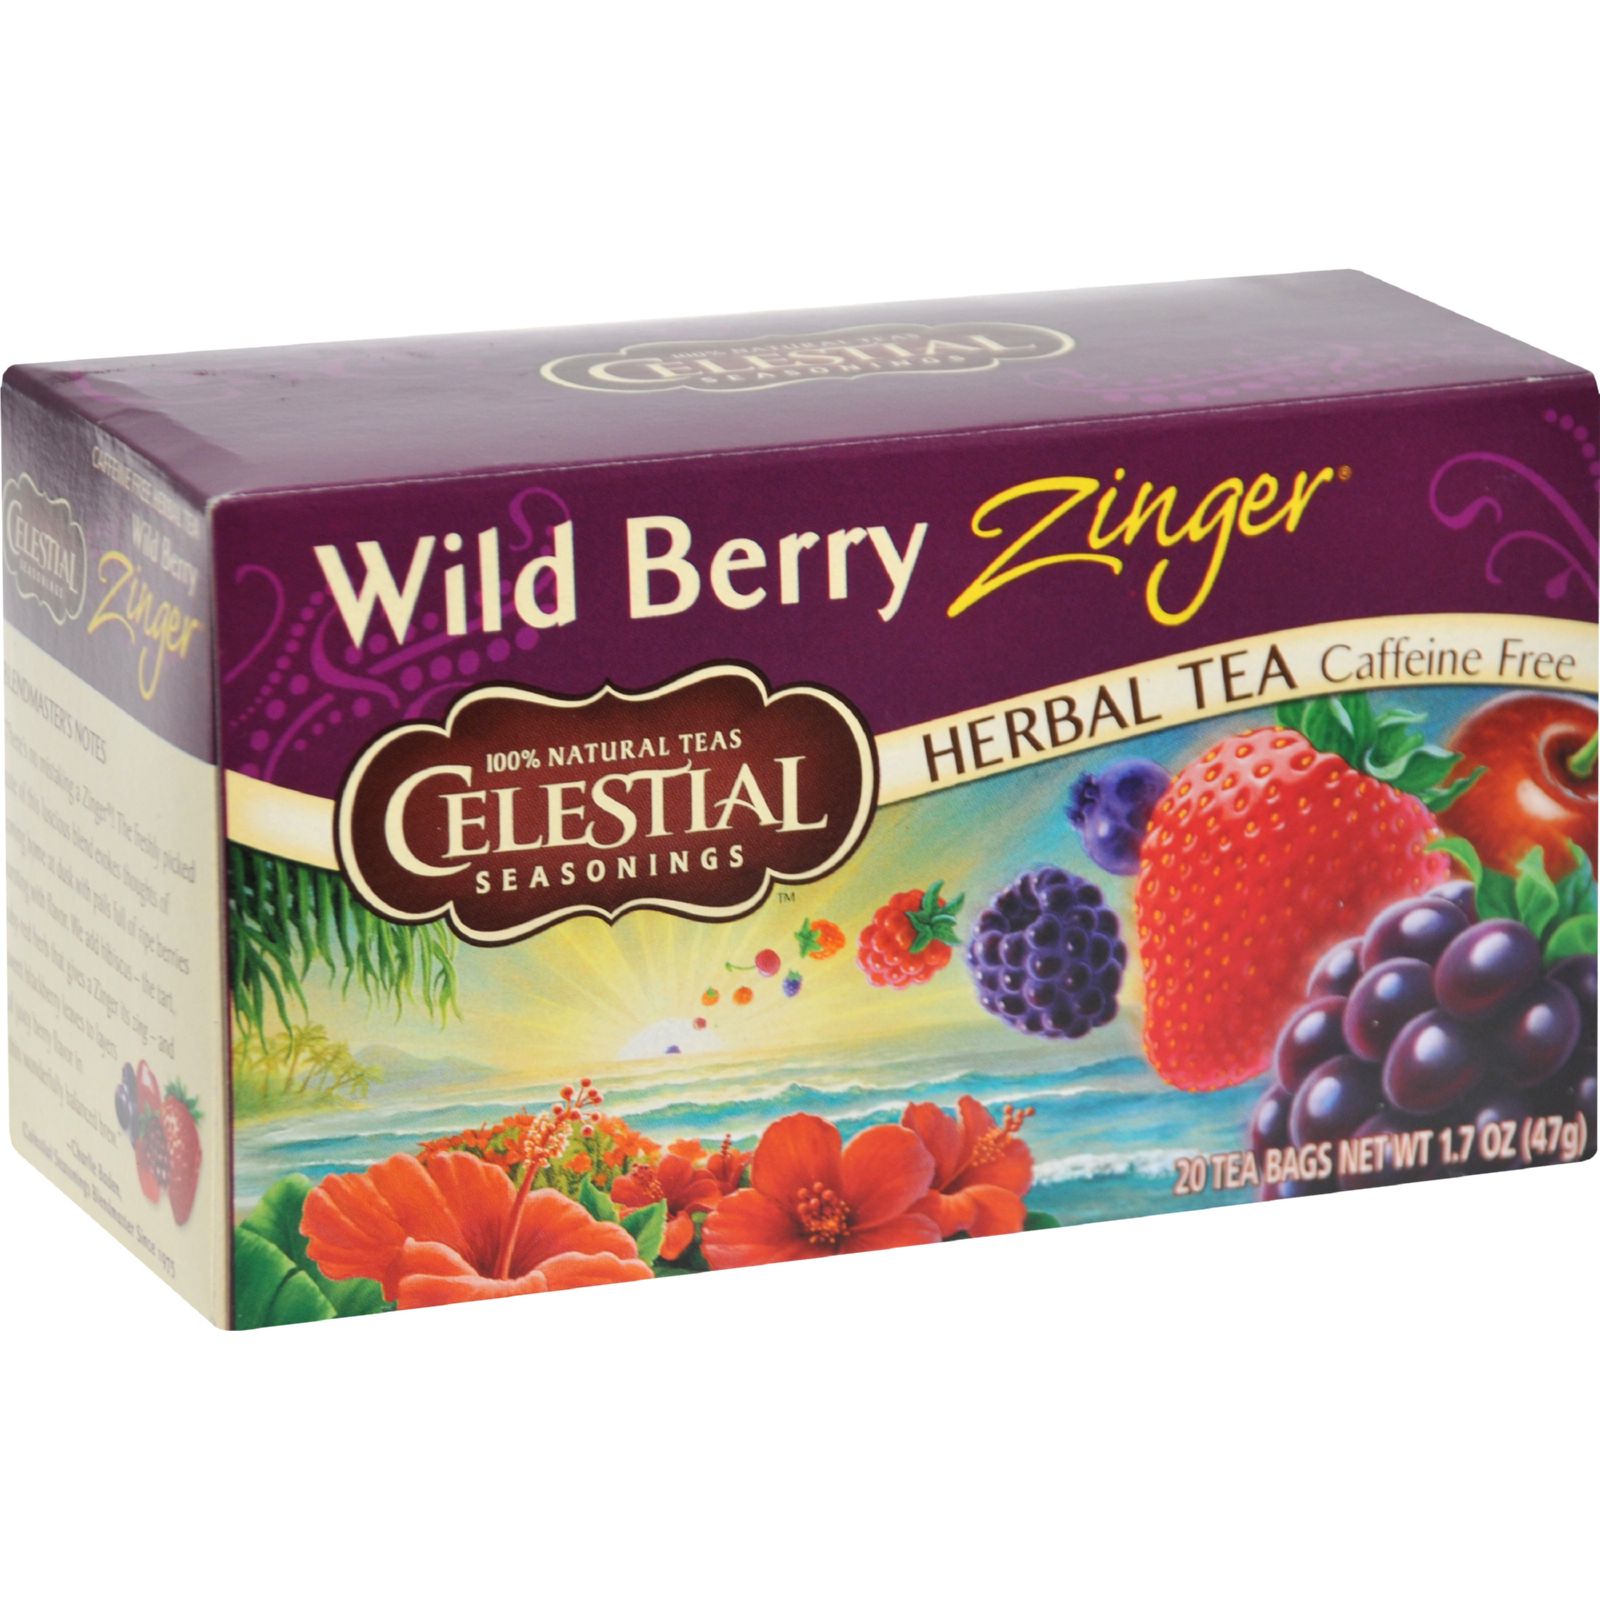 Celestial Seasonings чай. Tea Berry чай. Чай Wild. Wildberry Berry. Купить чай на wildberries